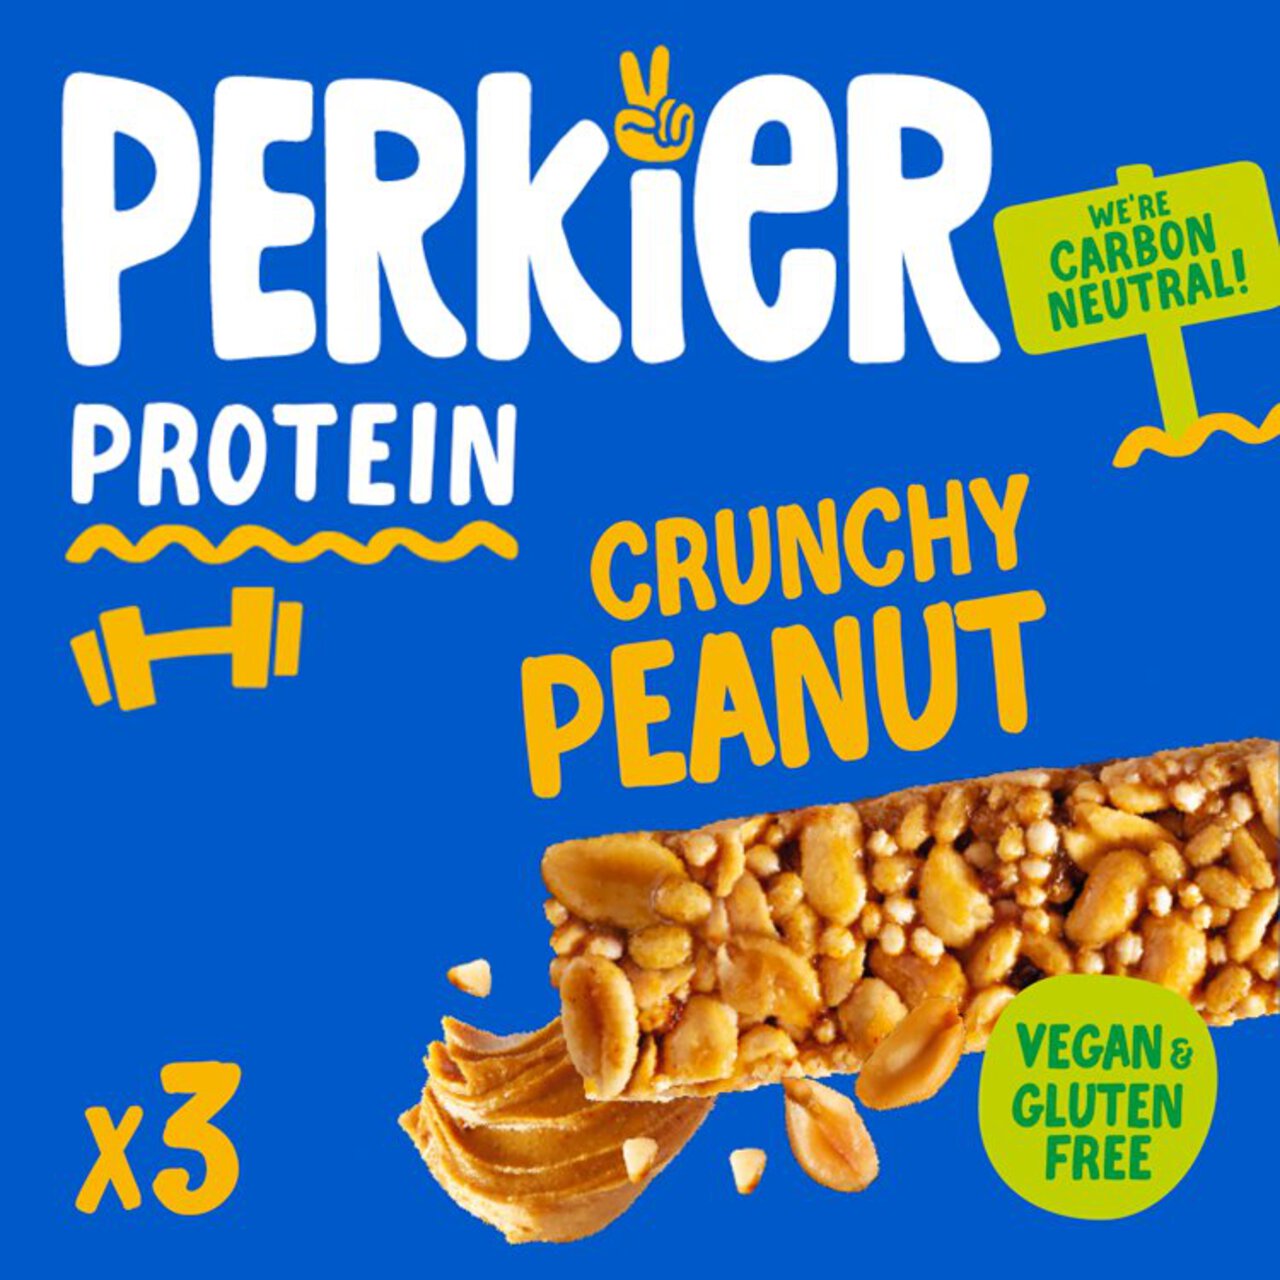 Perkier Crunchy Peanut Protein bars 3 x 35g